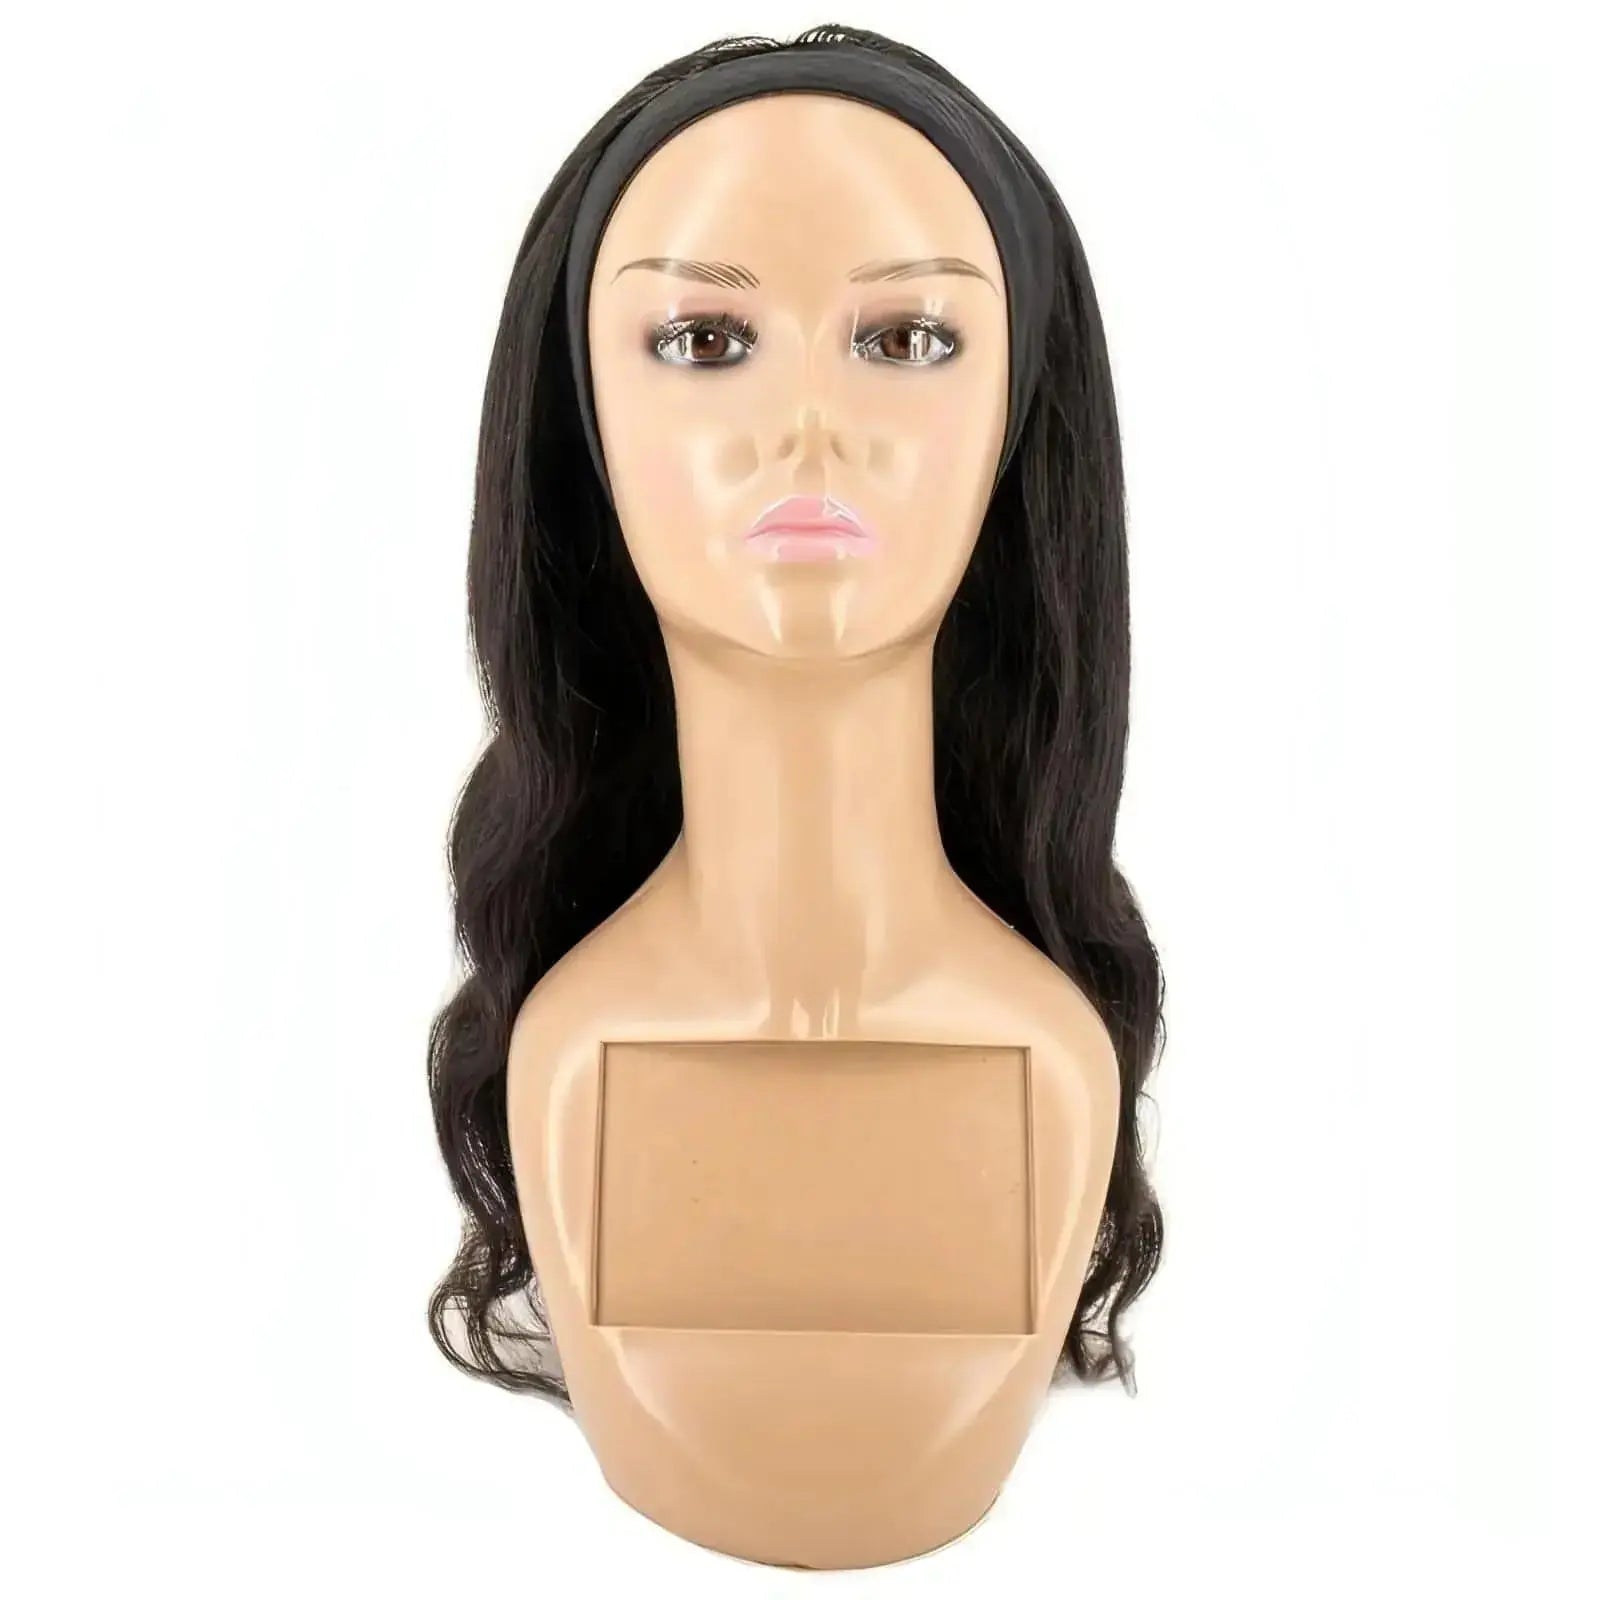 Virgin Headband Wigs - HookedOnBundles Virgin Hair